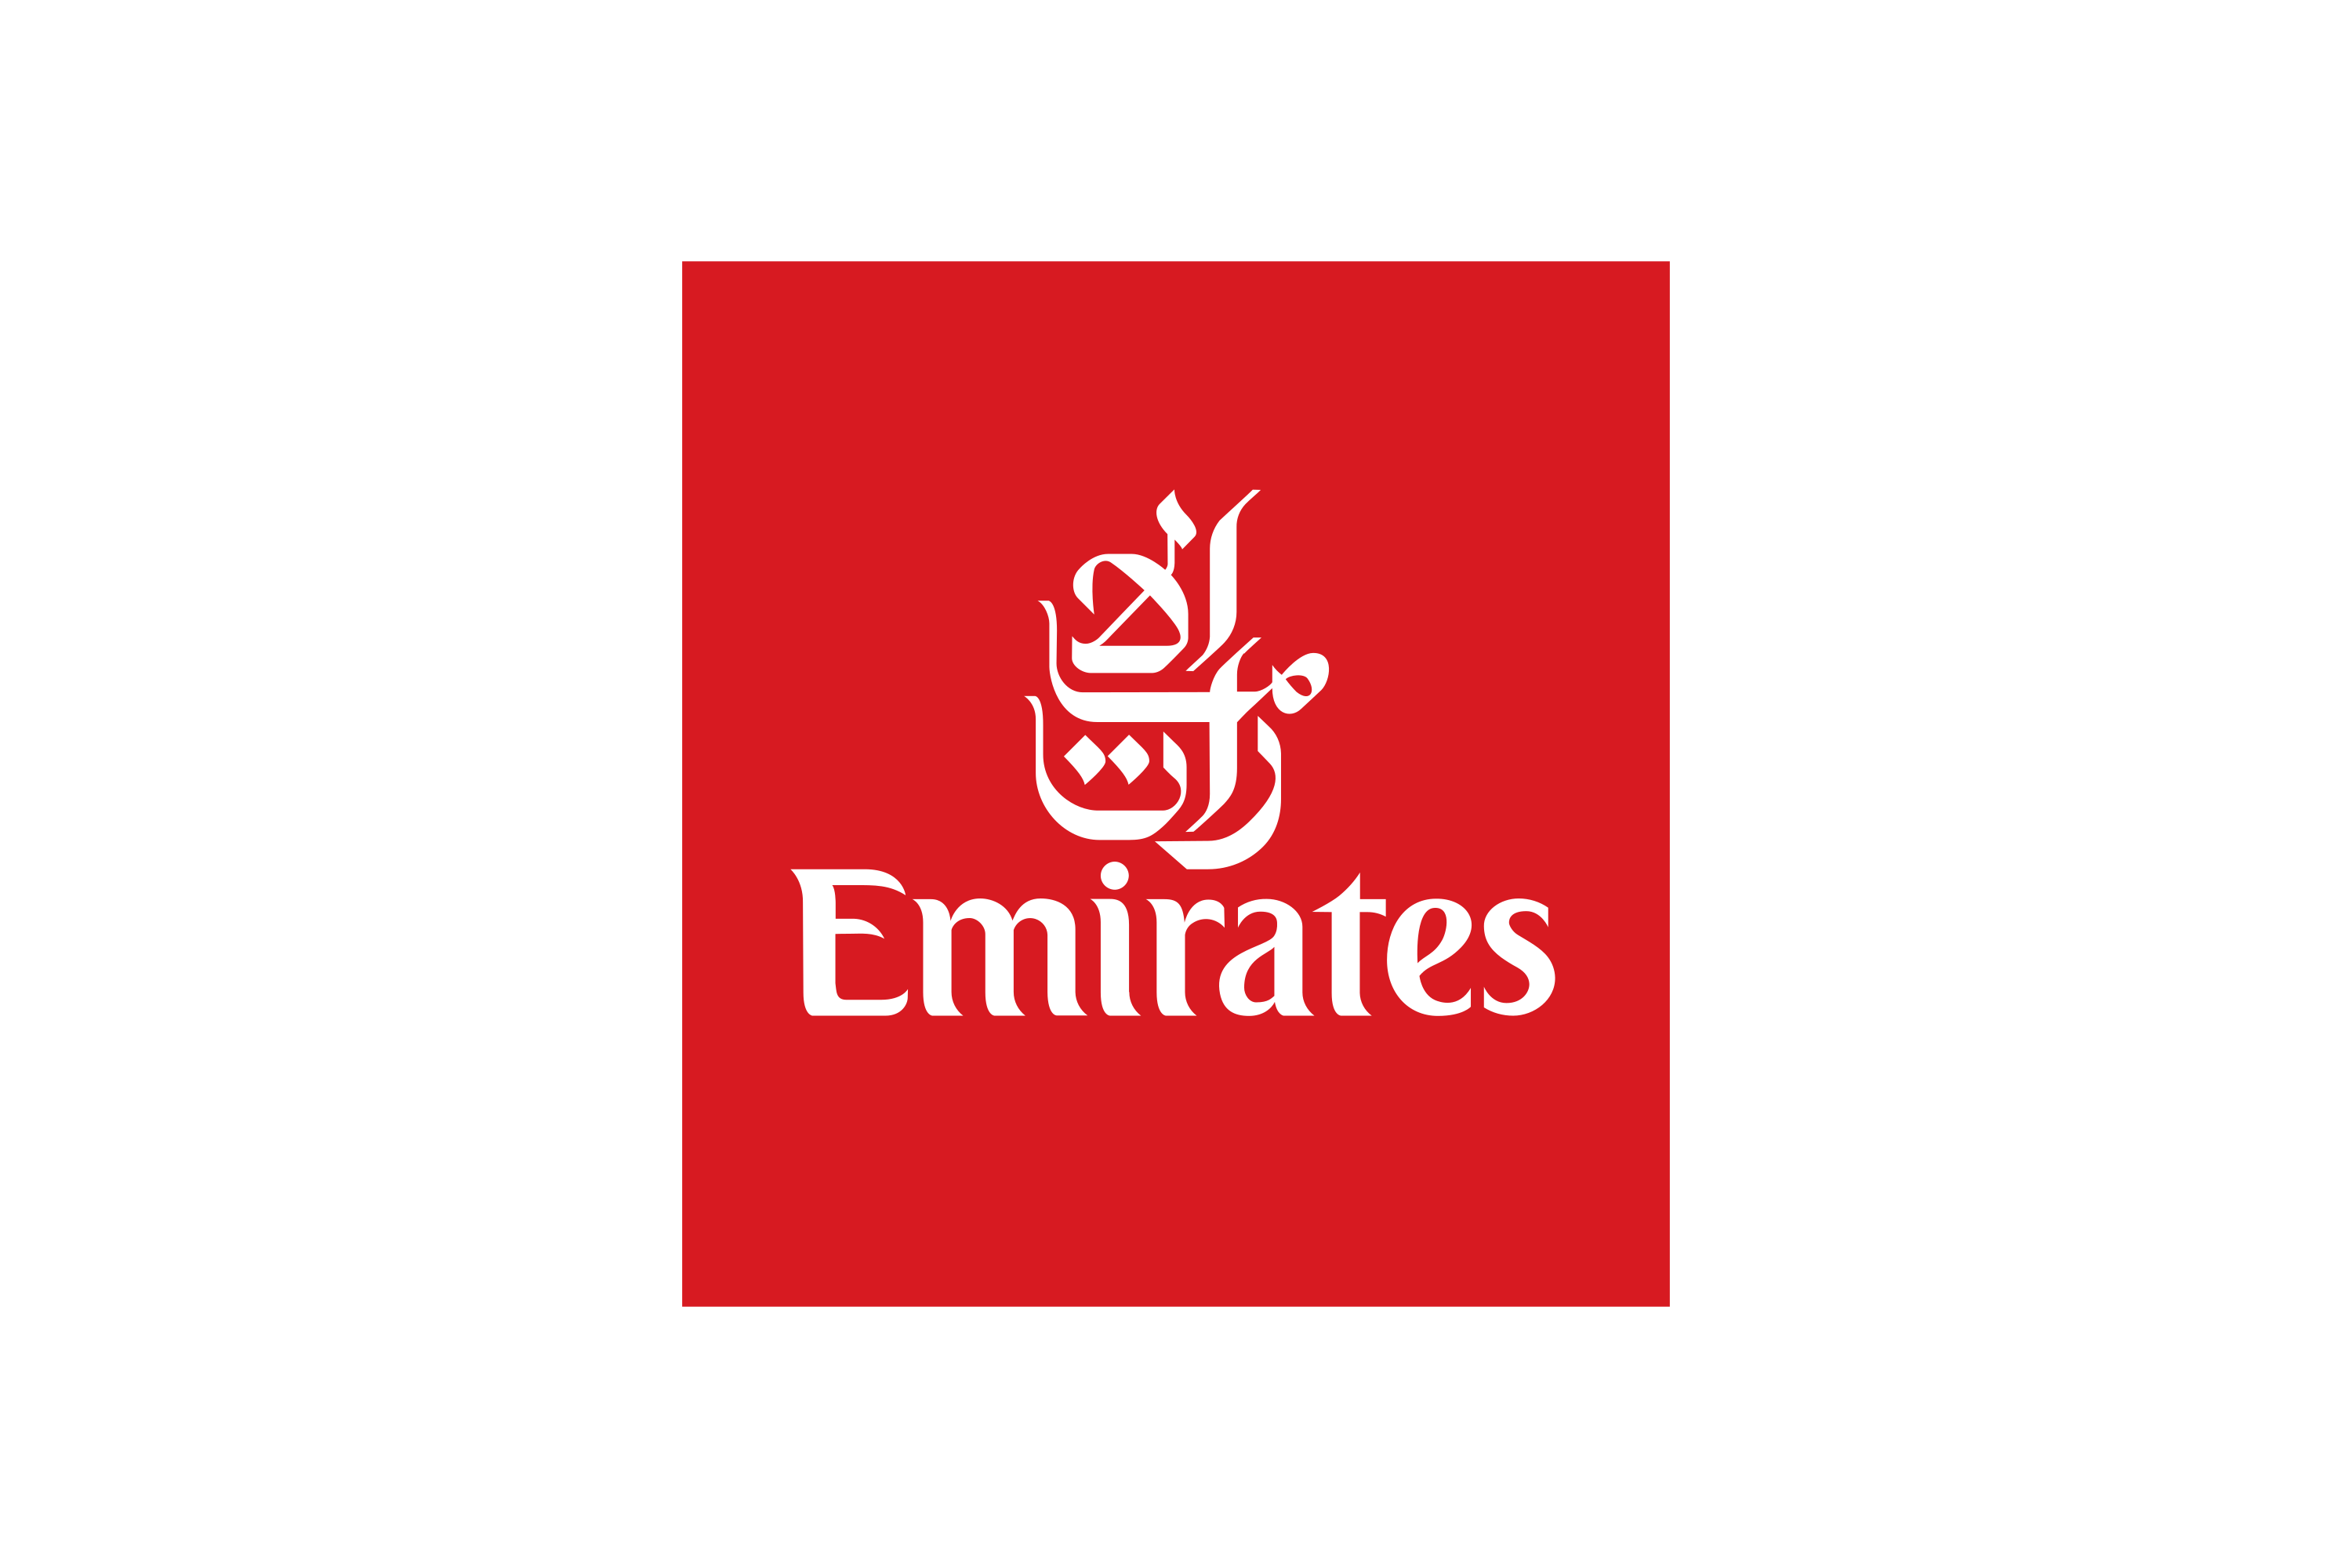 Download Emirates Logo in SVG Vector or PNG File Format - Logo.wine